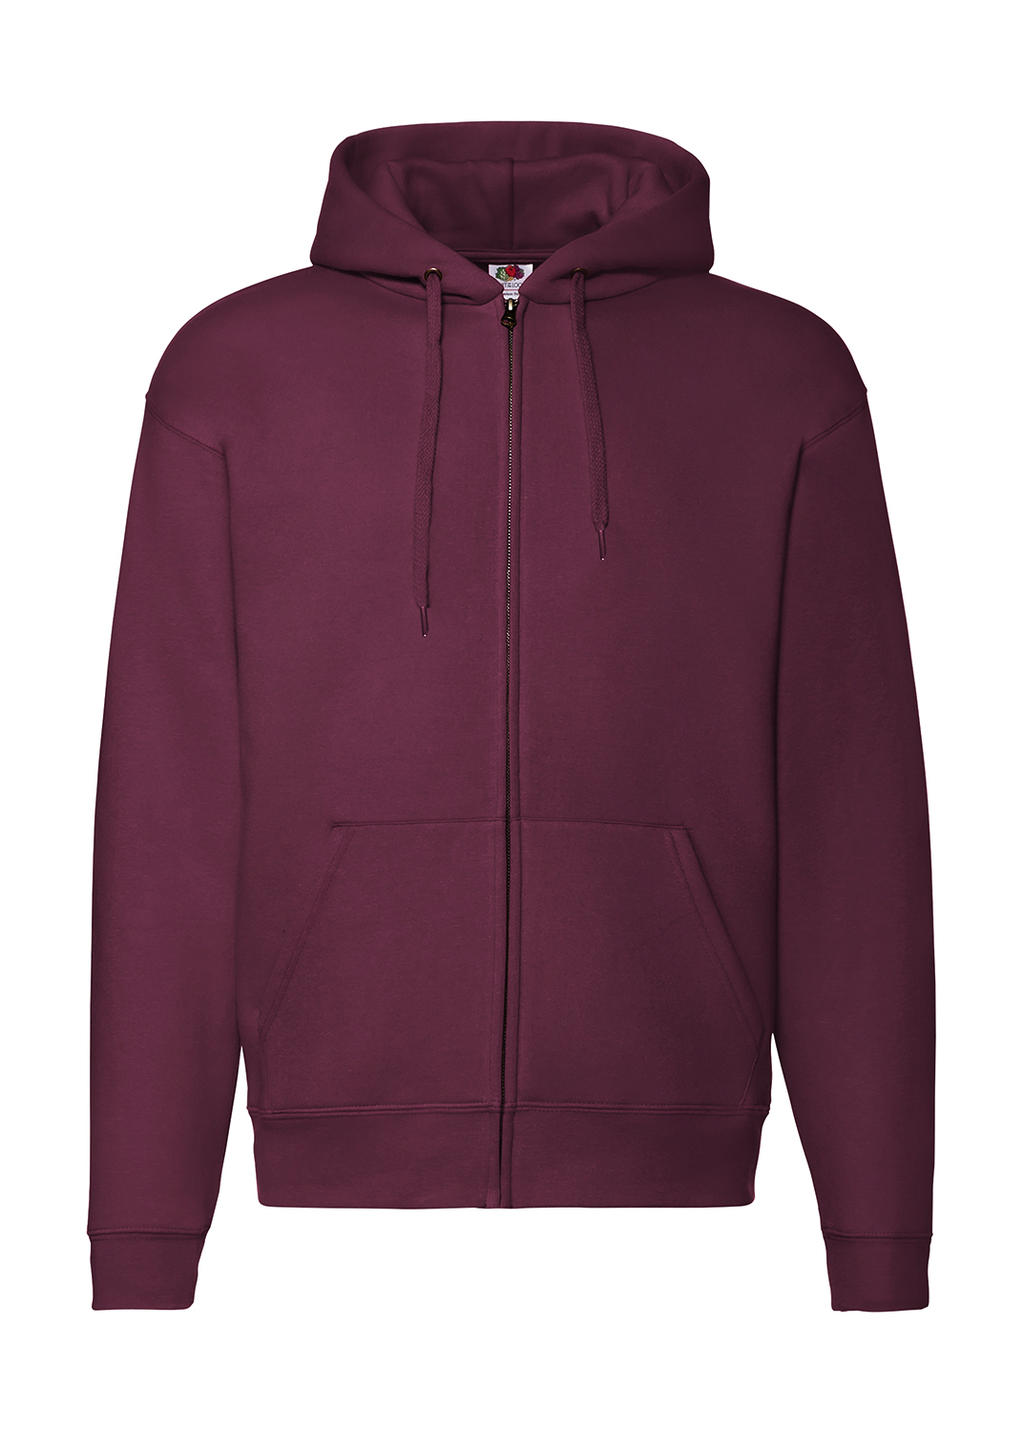  Premium Hooded Zip Sweat in Farbe Burgundy